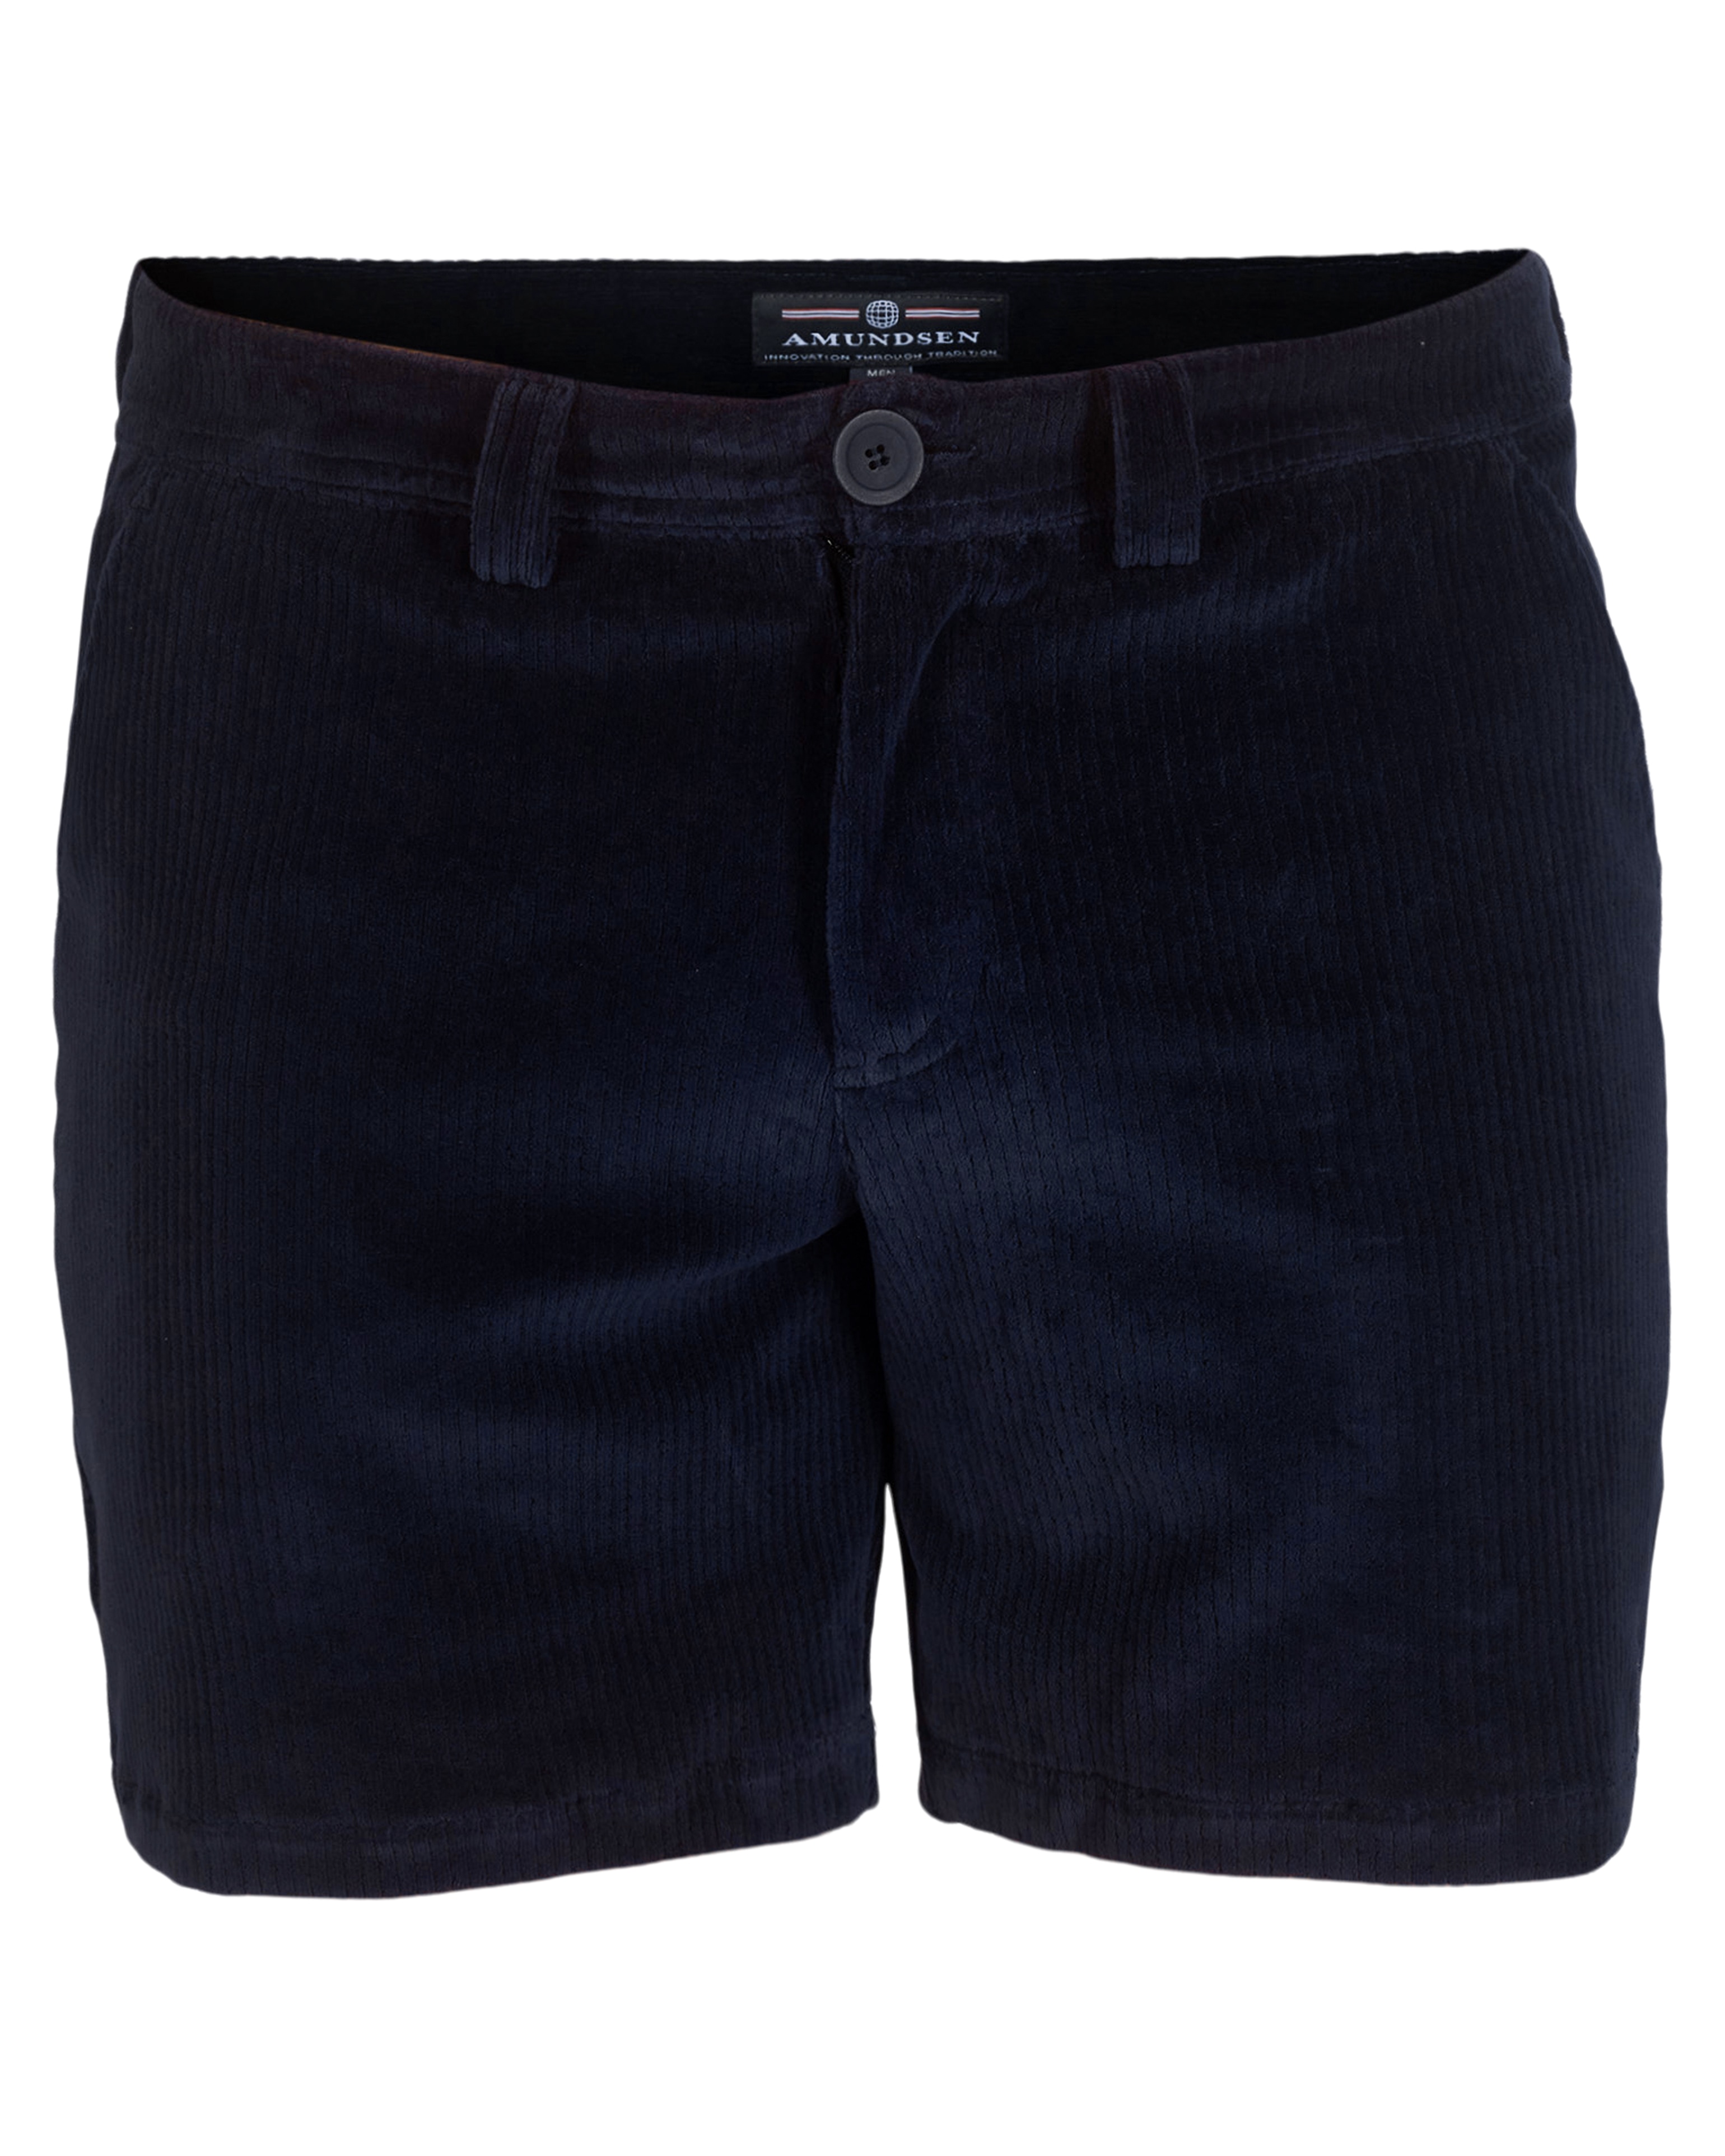 Amundsen 6incher Comfy Cord Shorts, Ms